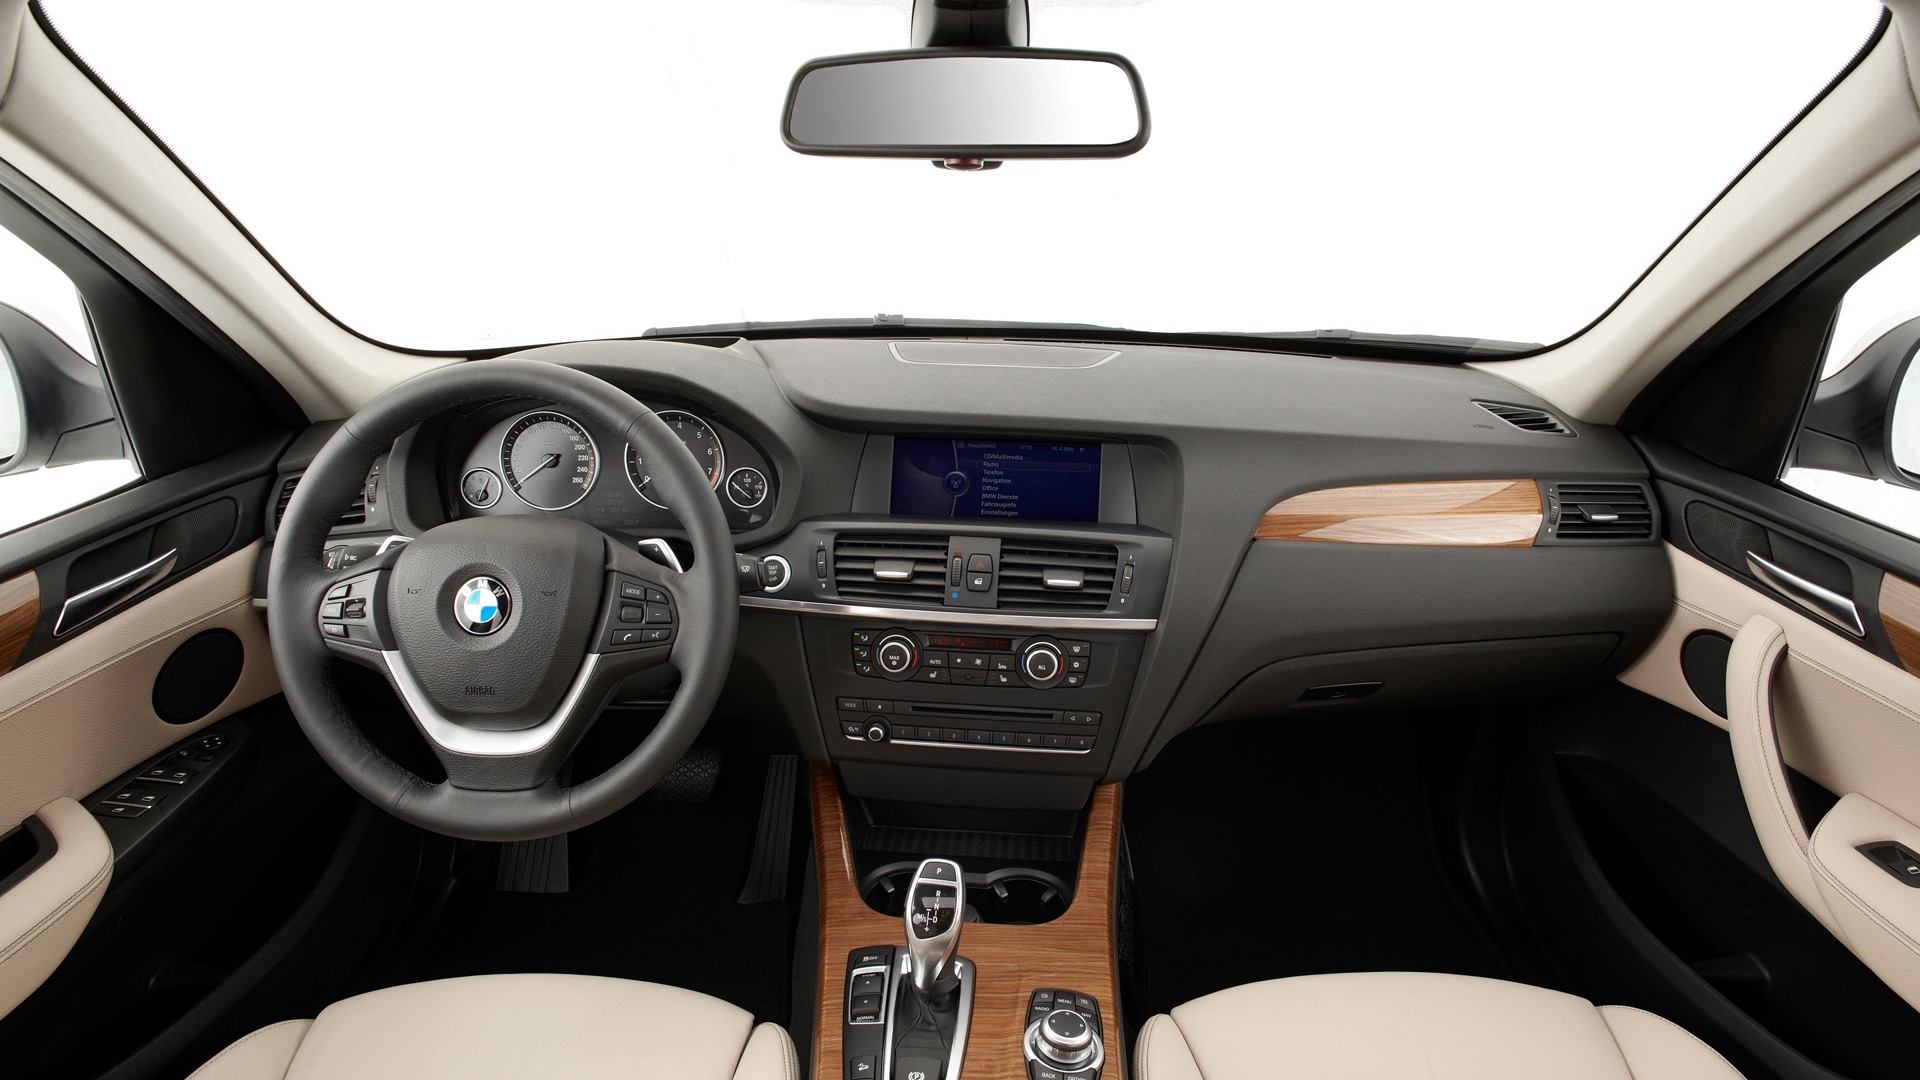 BMW X3 xDrive35i - 2010 寶馬(一) #39 - 1920x1080